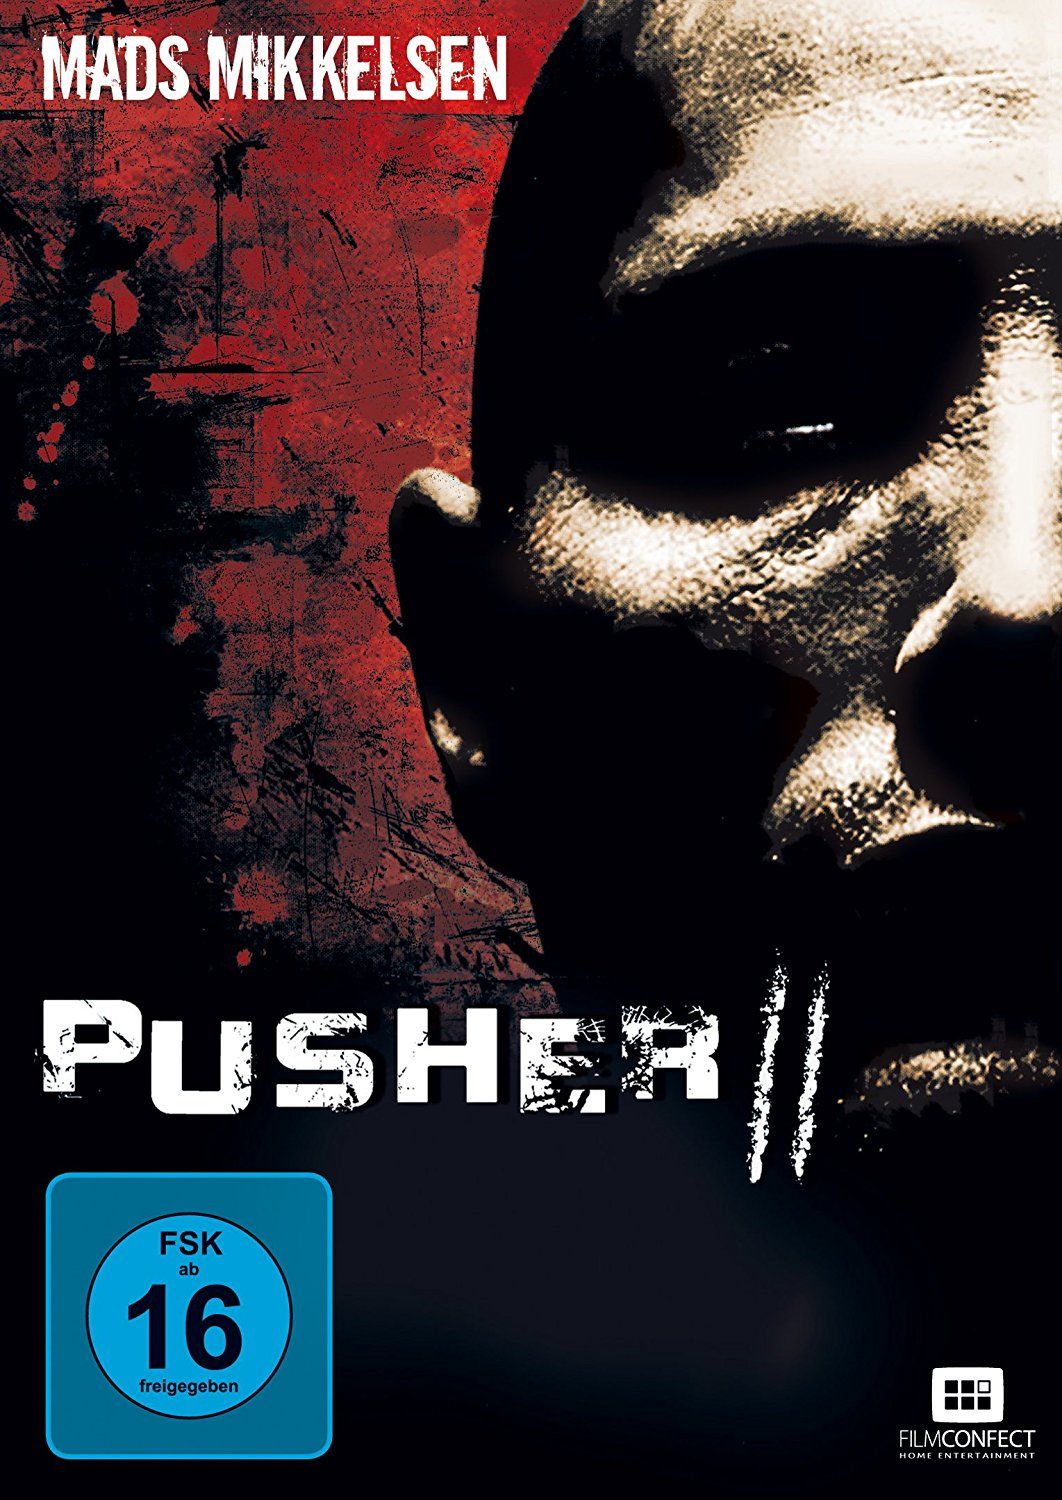 Pusher 2